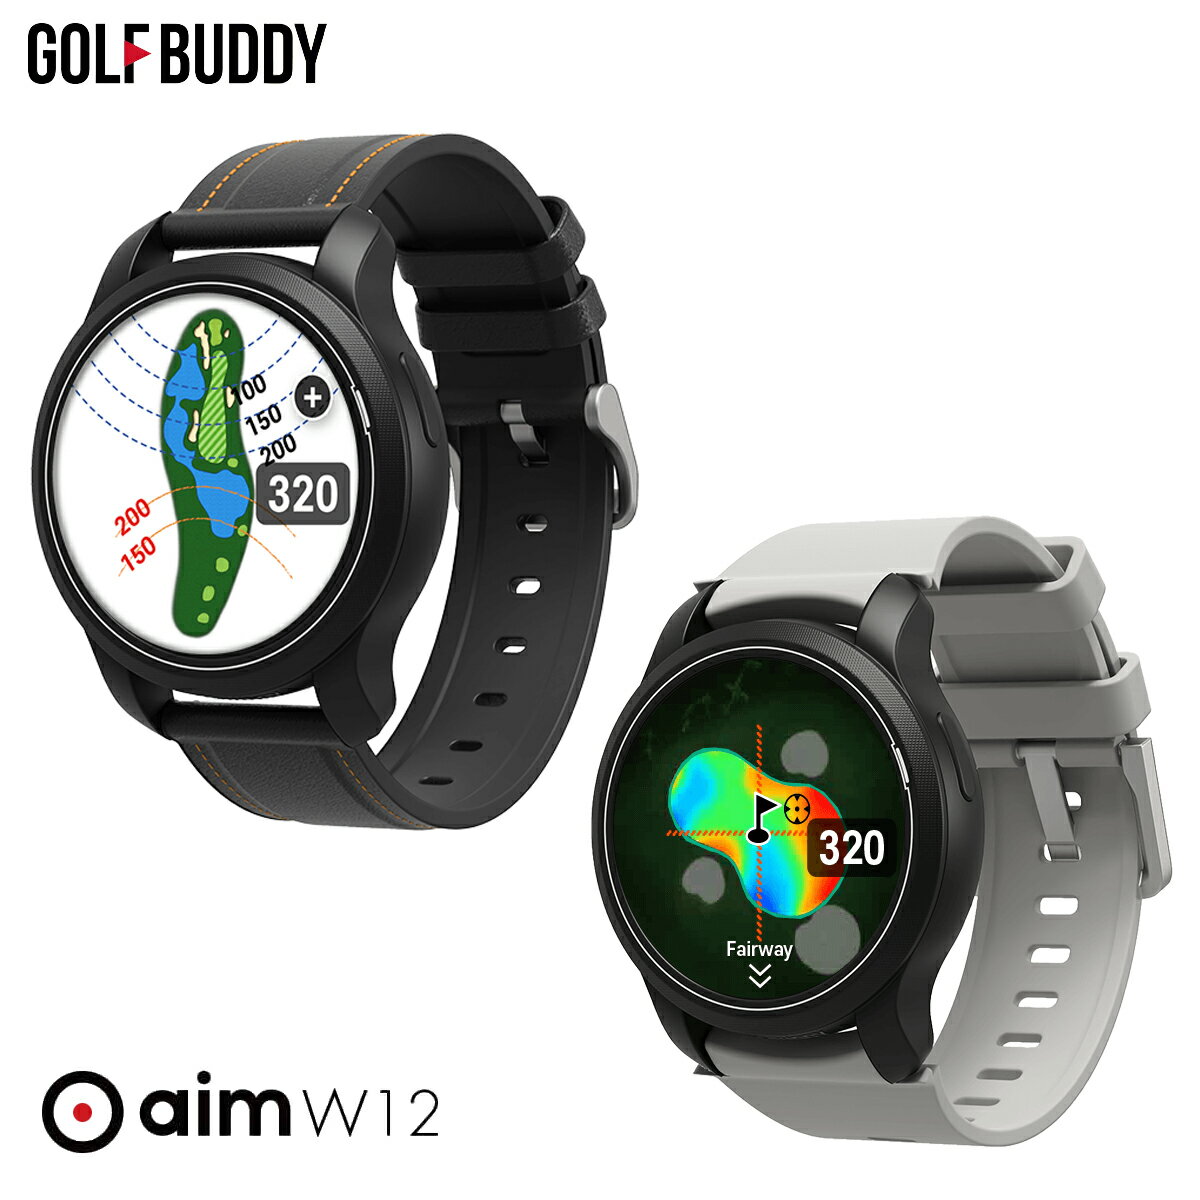 GOLFBUDDY ゴルフバディ正規品 aim W12 腕時計型GPS watch ゴルフナビ ウォッチ 「 GPS距離測定器 」 【あす楽対応】